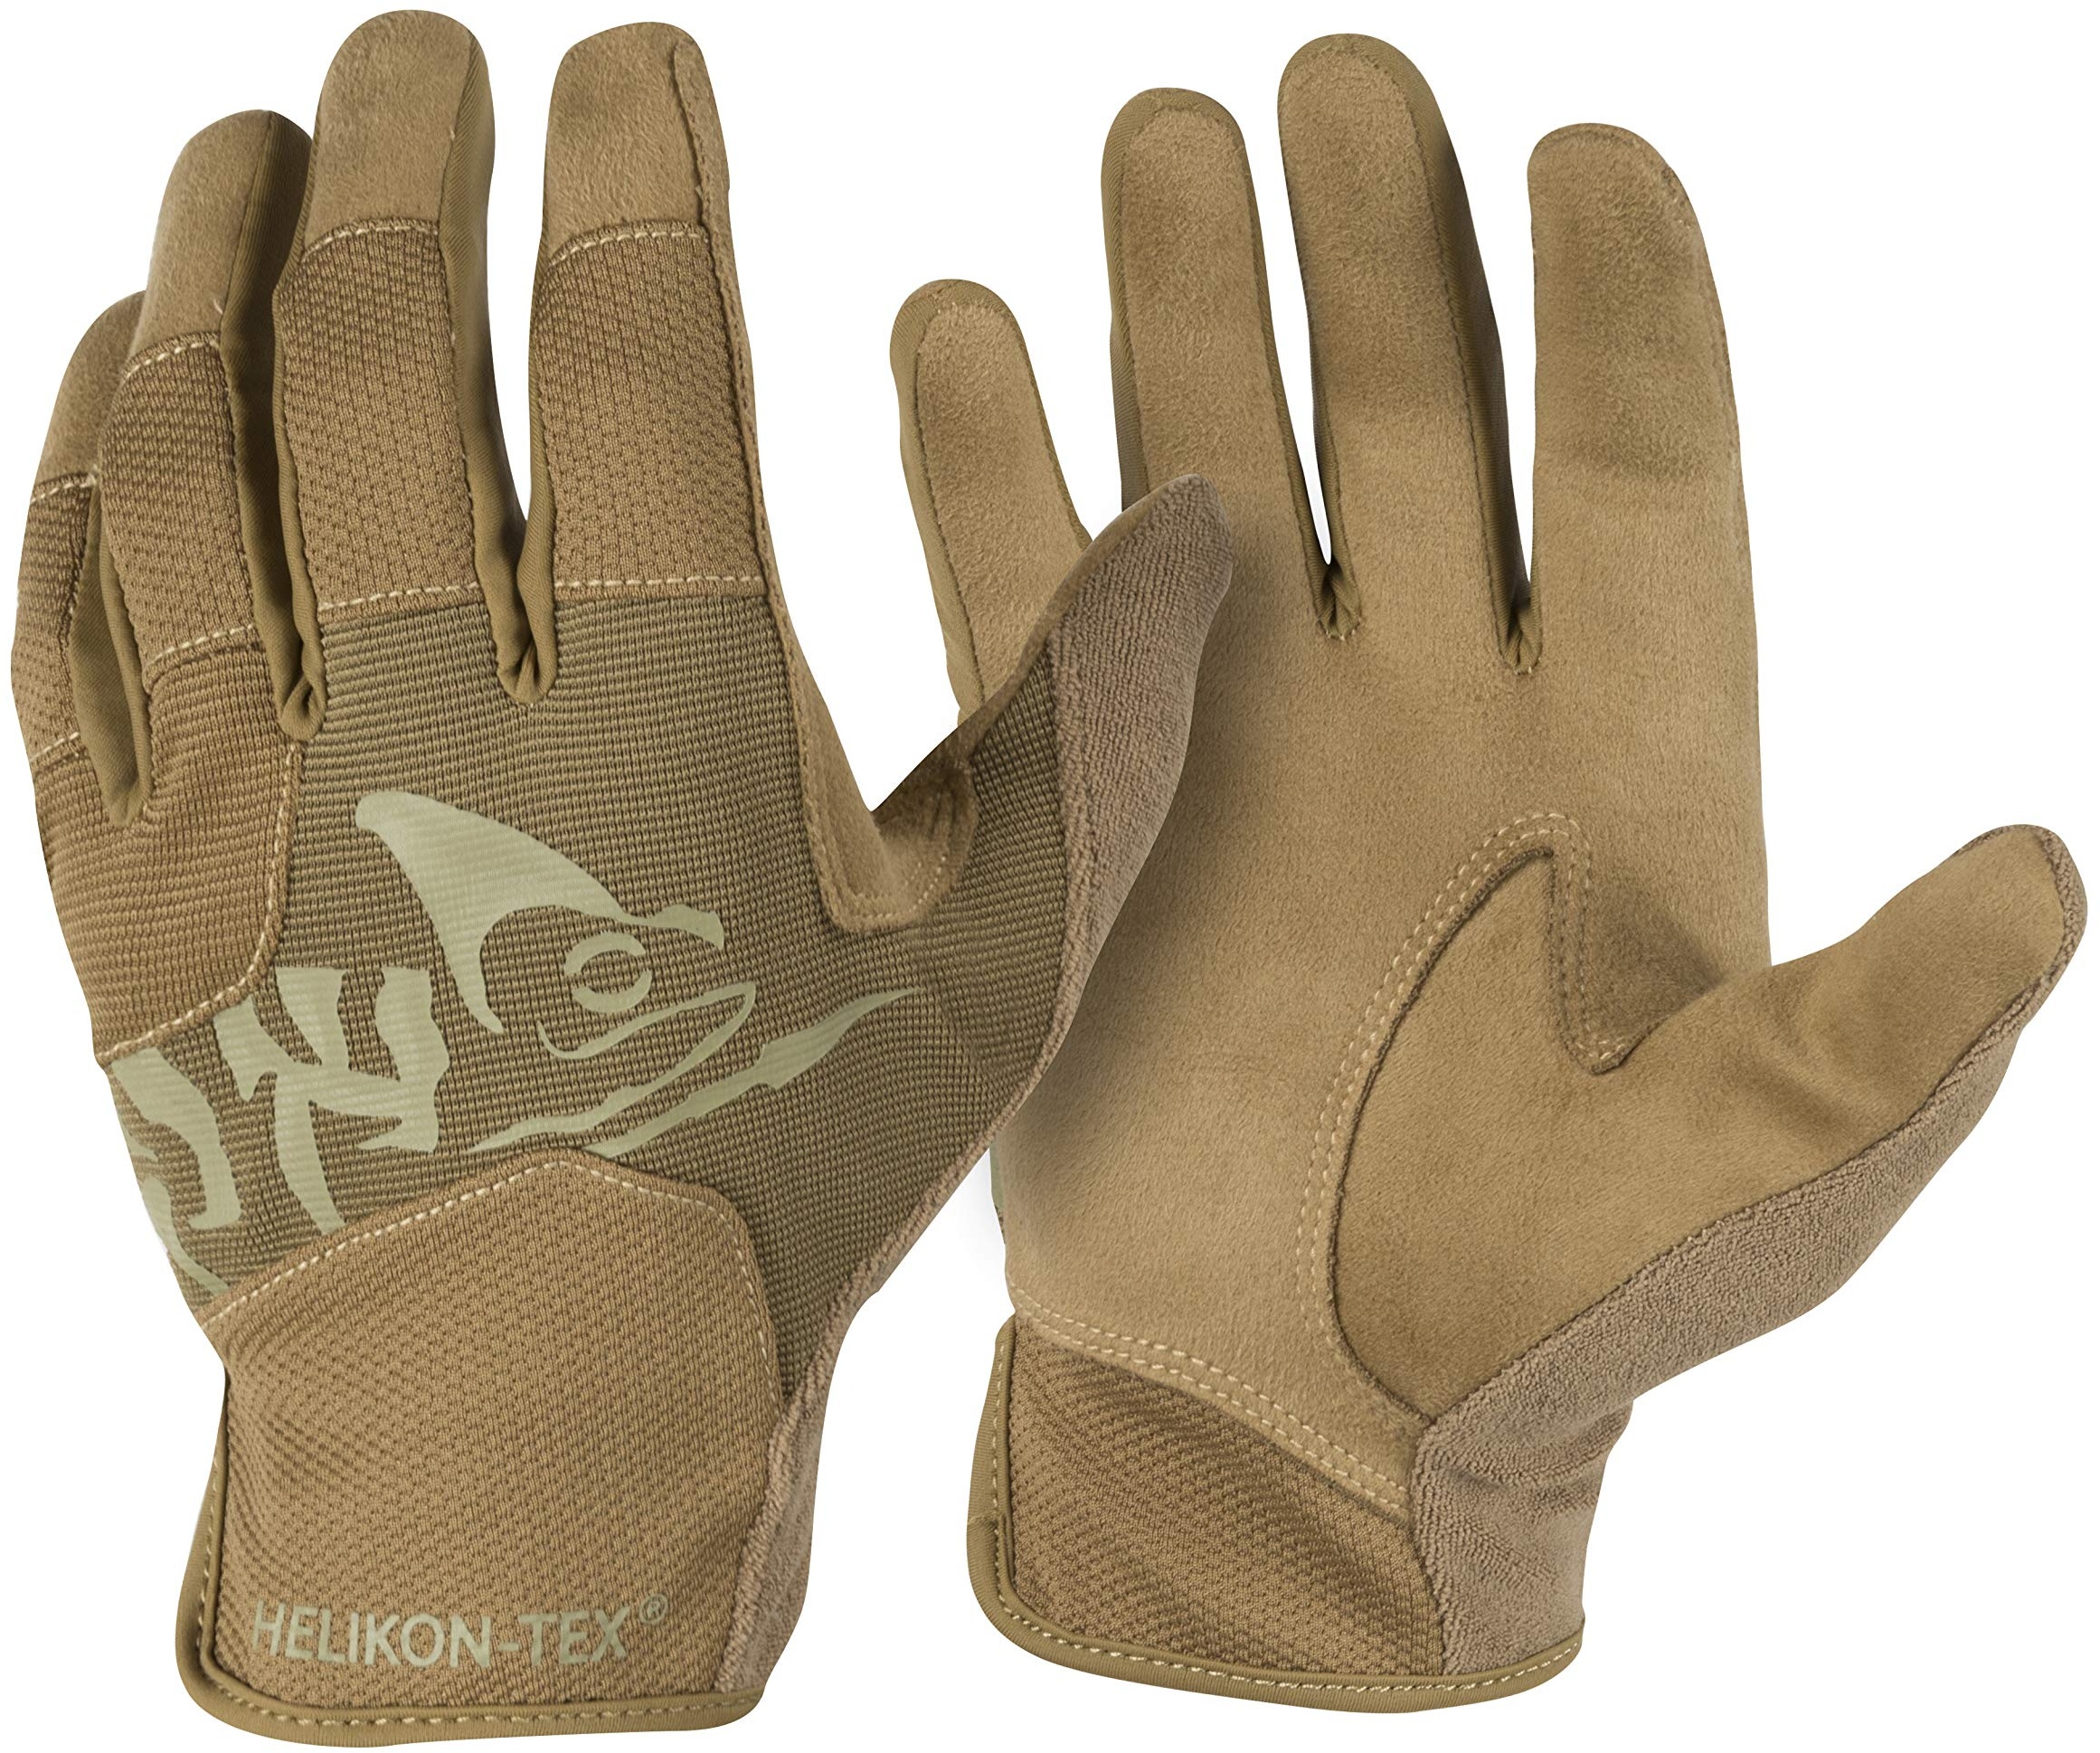 Helikon-Tex Herren All Round Fit Tactical Handschuhe, Grün (Coyote/Adaptive Green), M